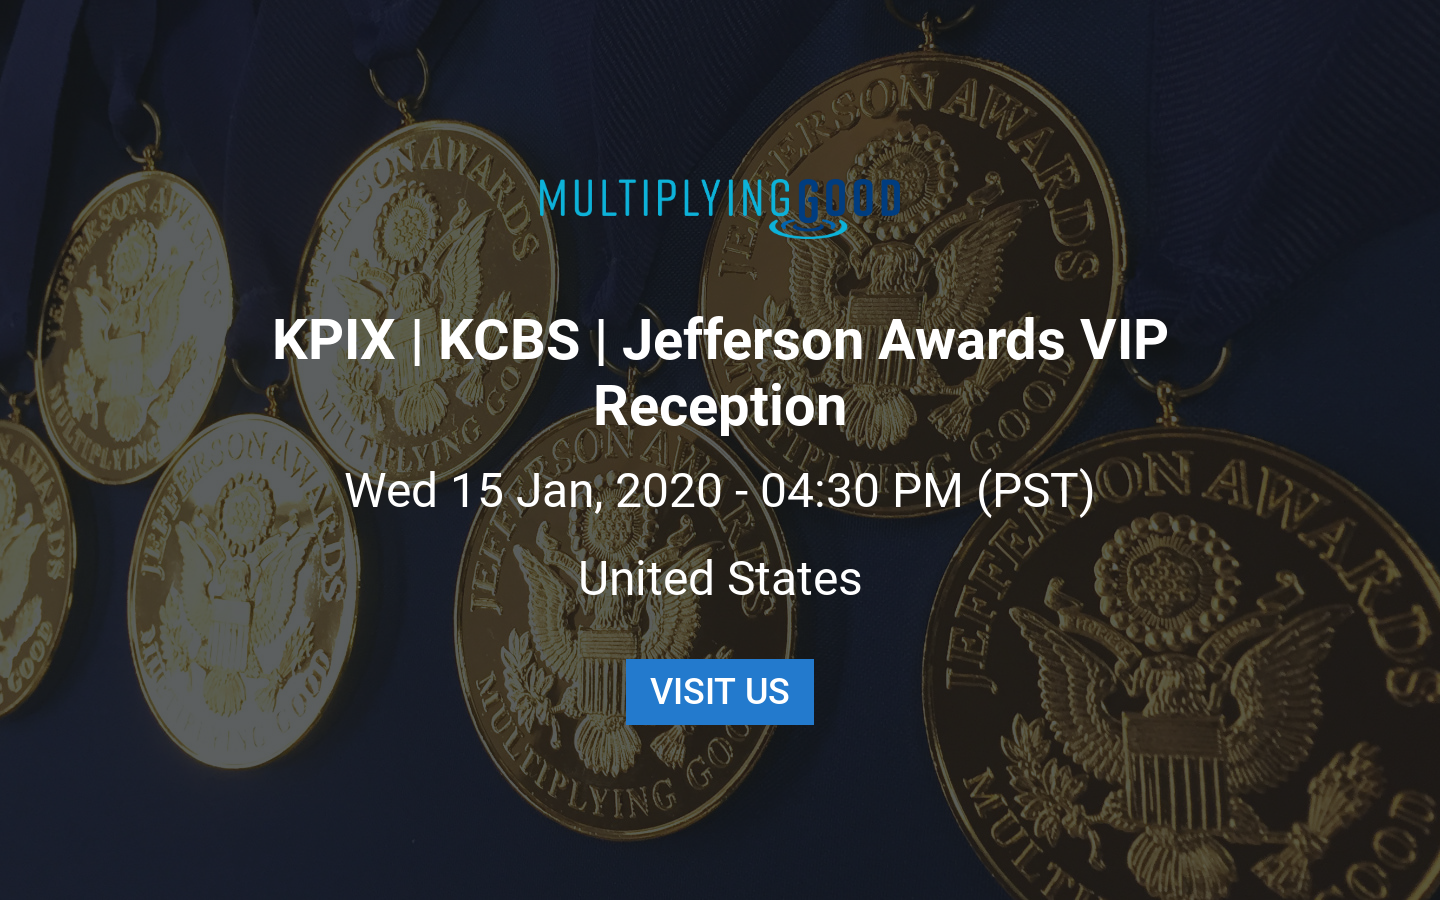 KPIX KCBS Jefferson Awards VIP Reception